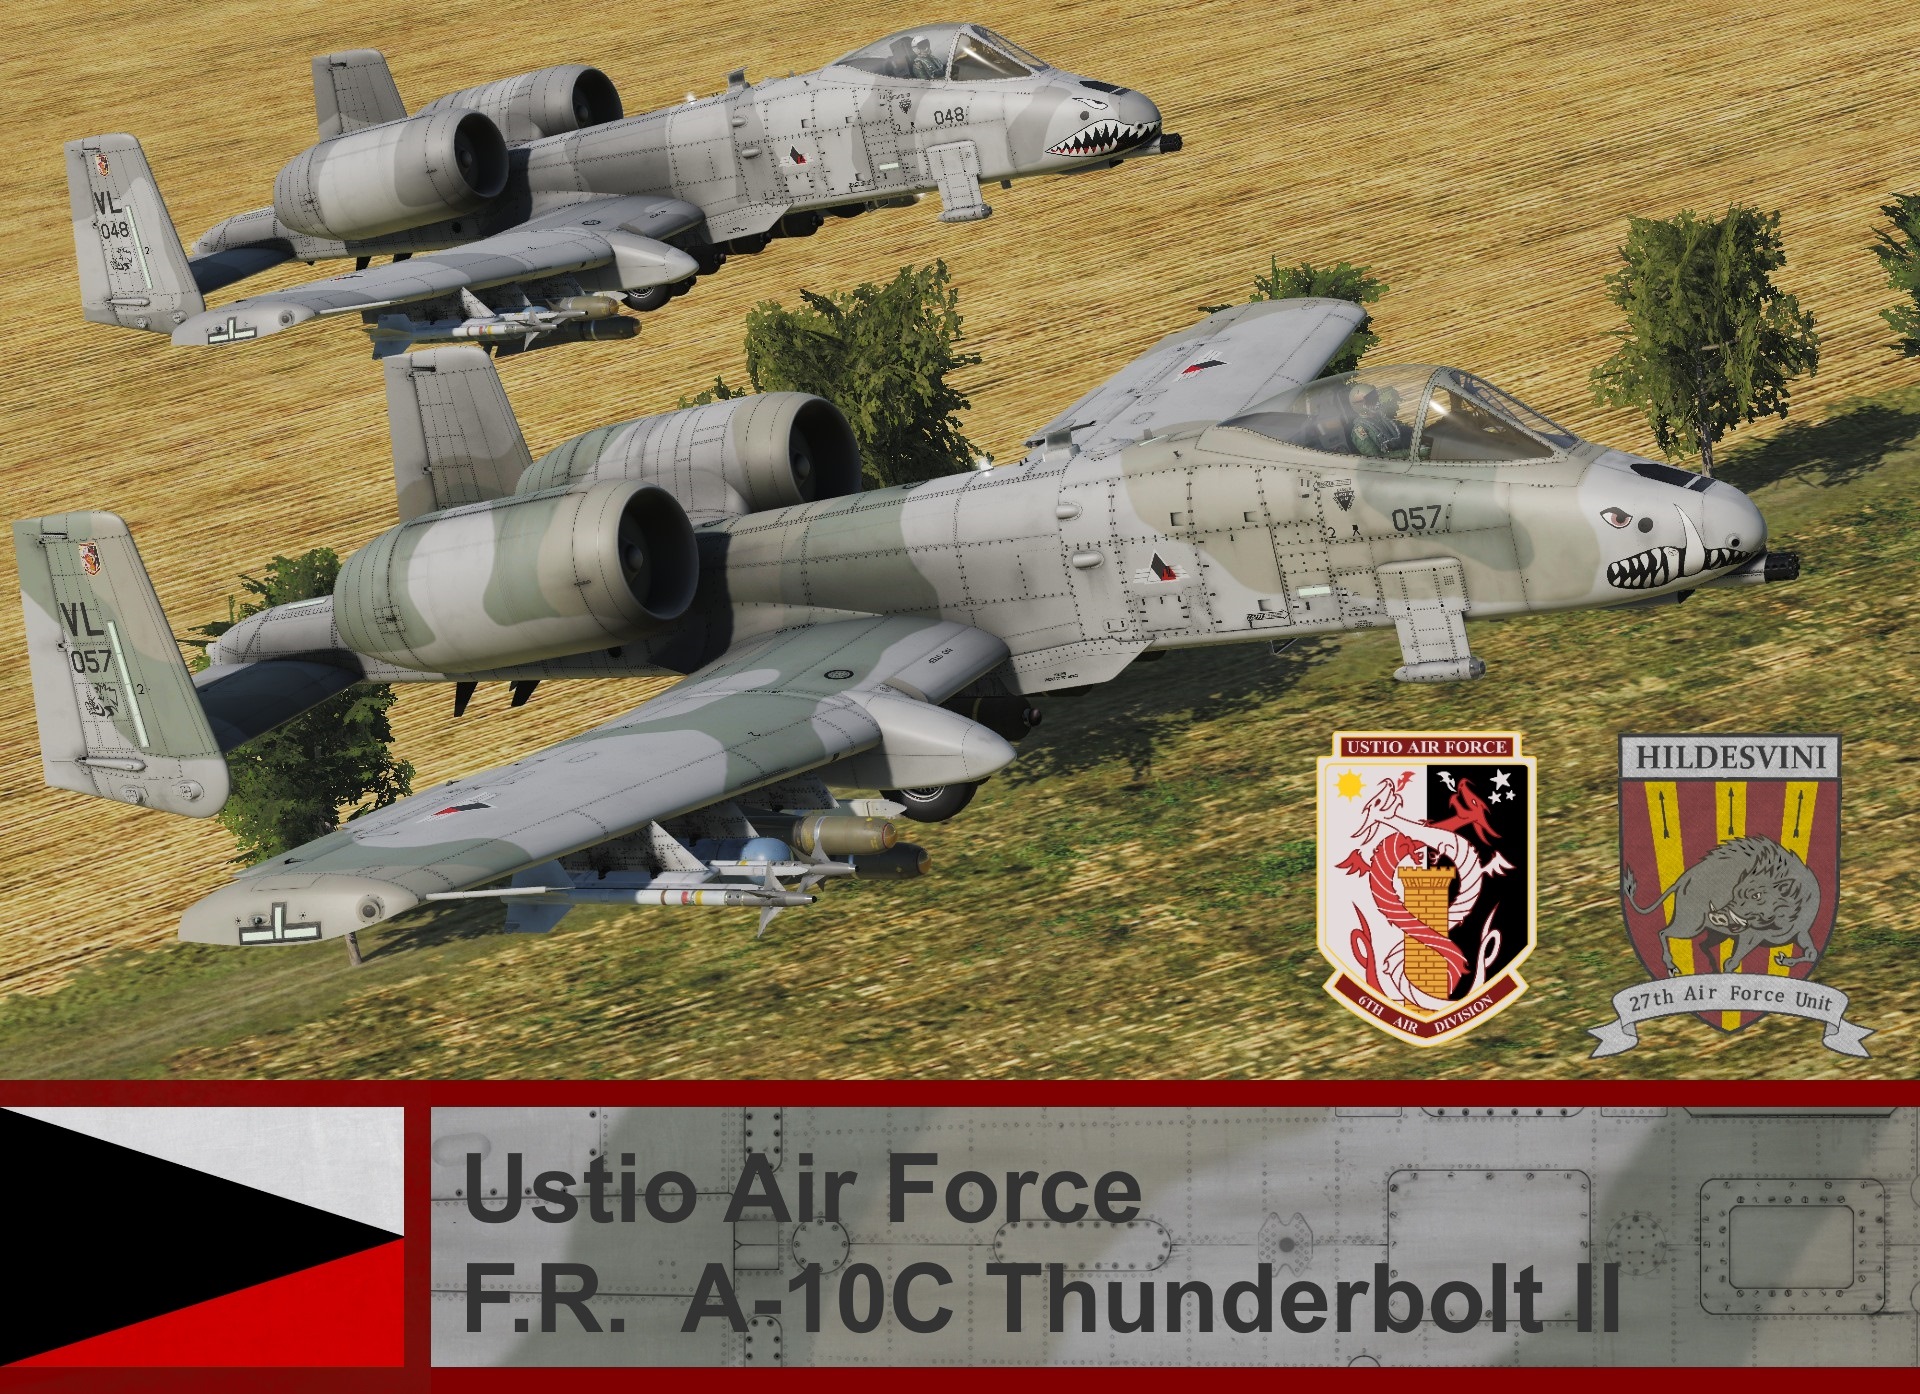 Ustio Air Force A-10C - Ace Combat Zero (27th AFU)